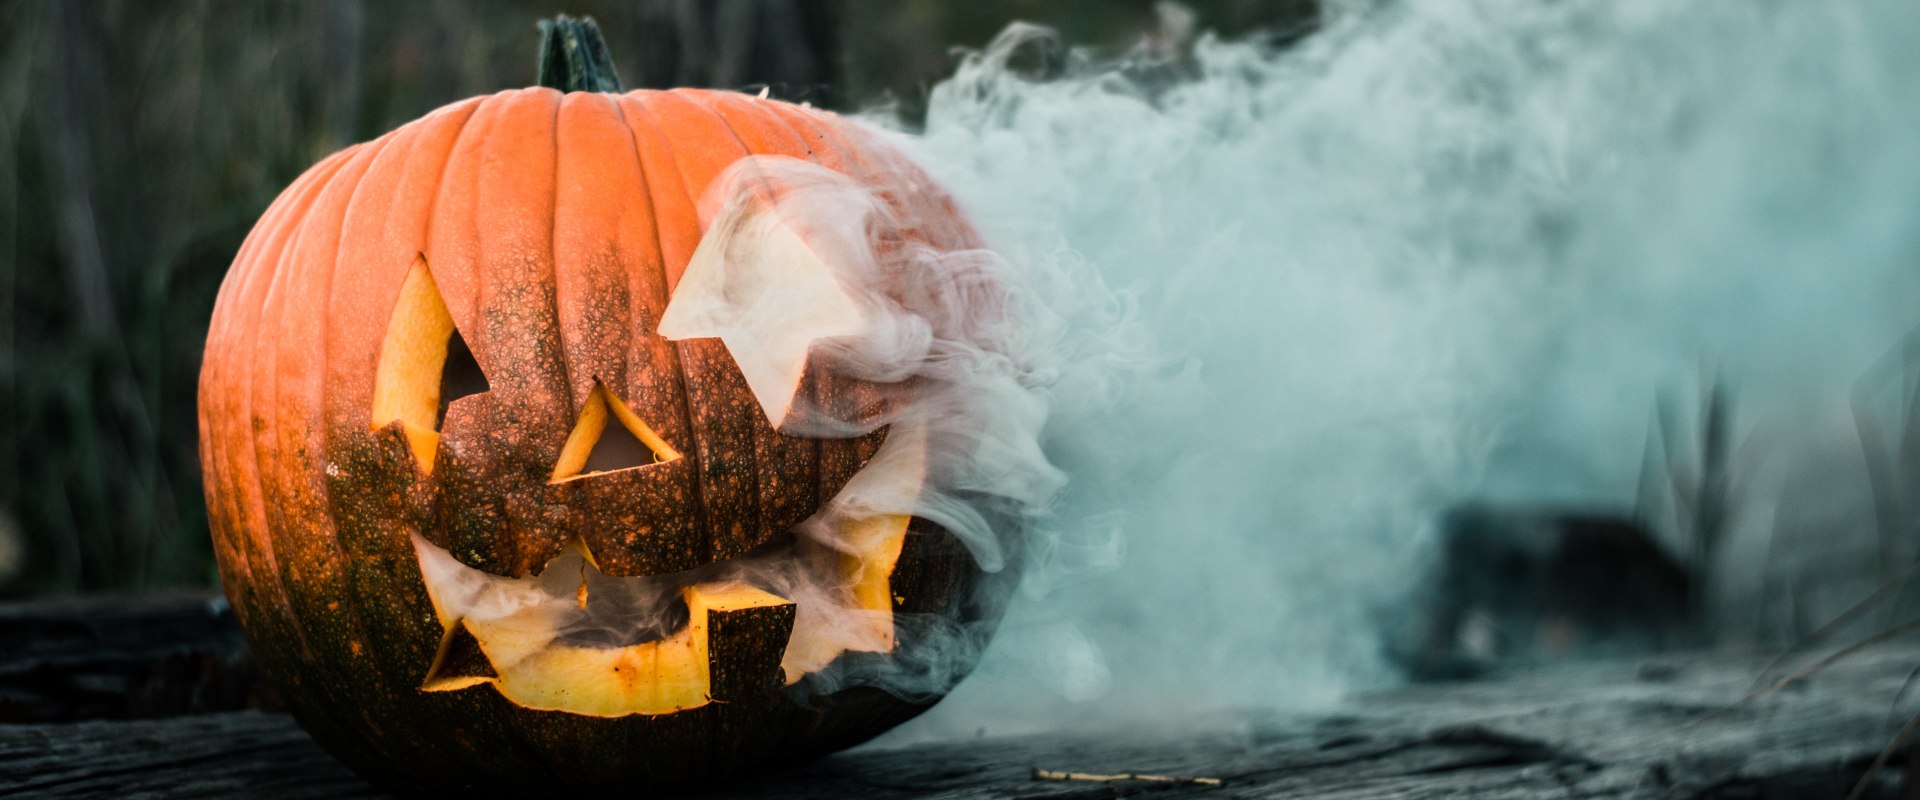 The Best Places to Go Hayriding Near Oklahoma City for a Spooky Halloween